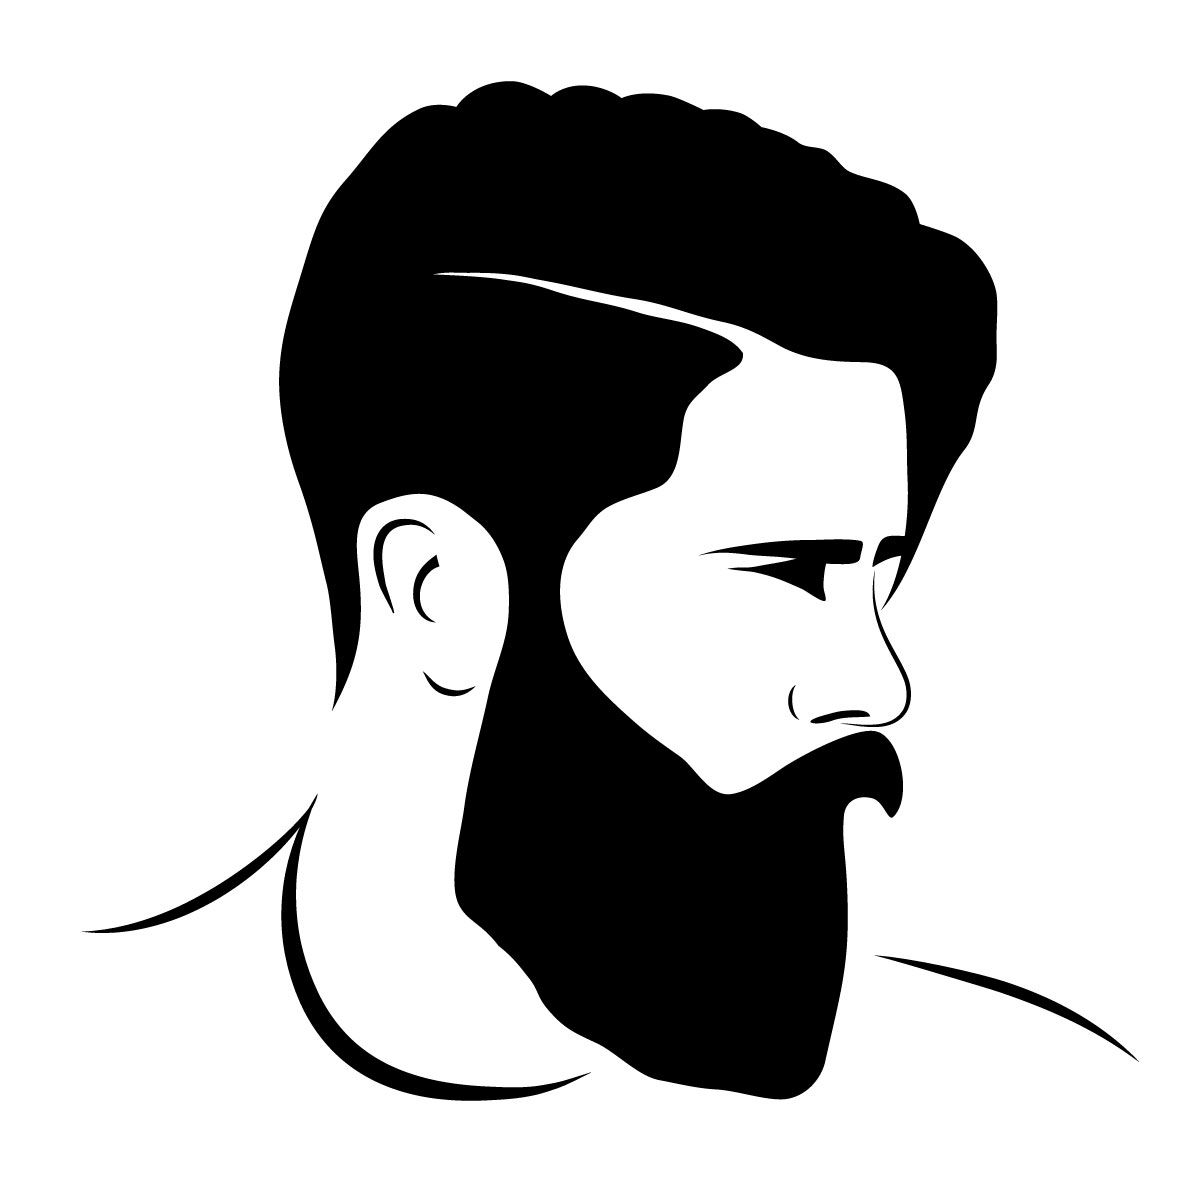 ikon mand med skæg - skægolie